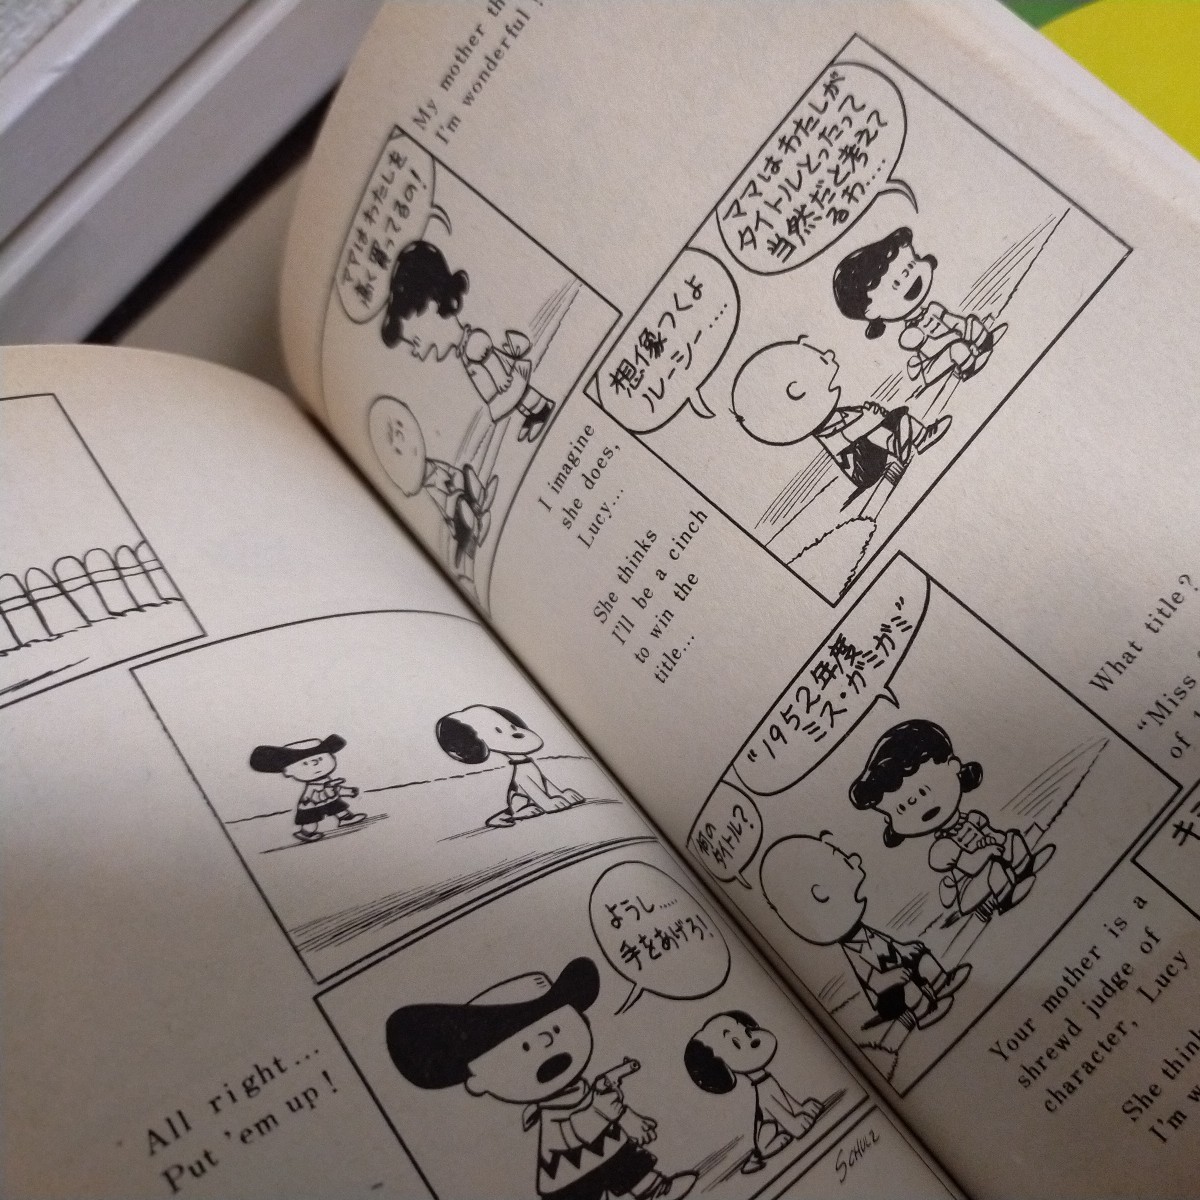  postage included Peanuts books Charles M*shurutsu Tanikawa Shuntaro crane bookstore .tsuru* comics company English manga Japanese translation attaching Snoopy 